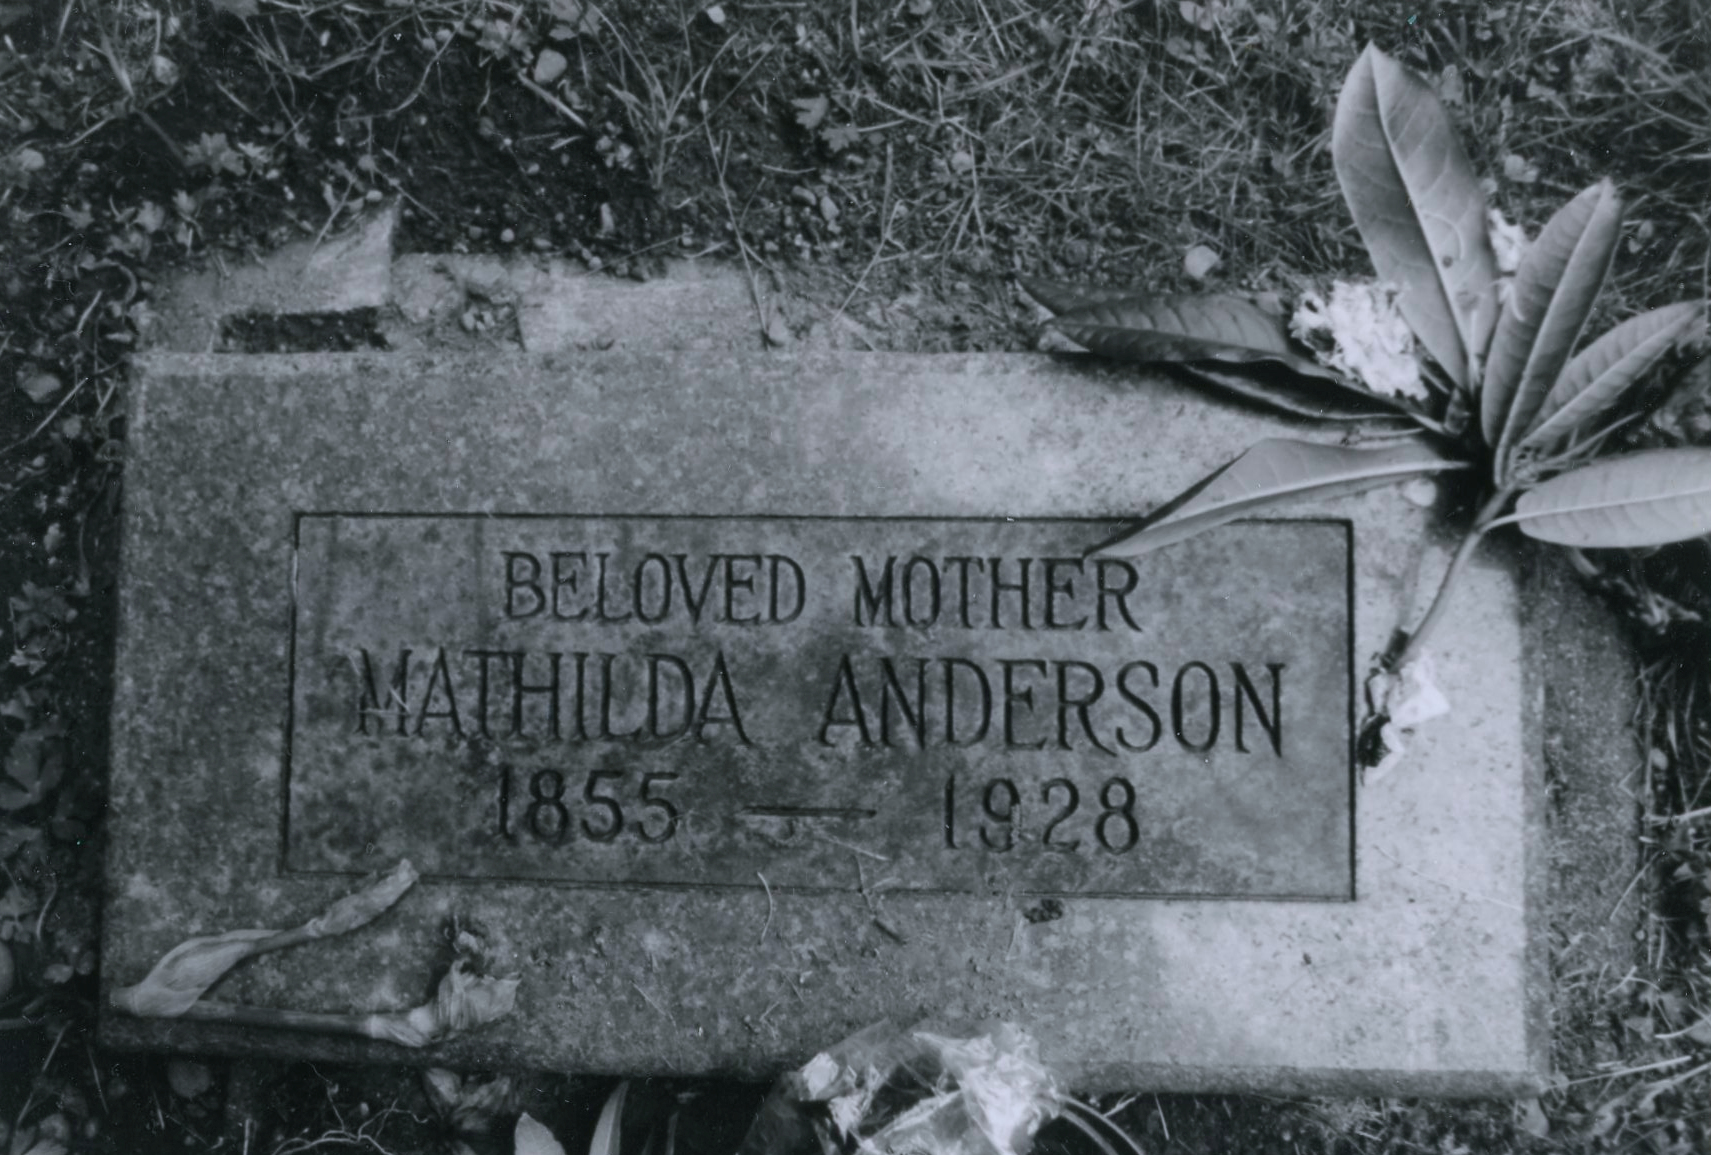 Anderson, Mathilda